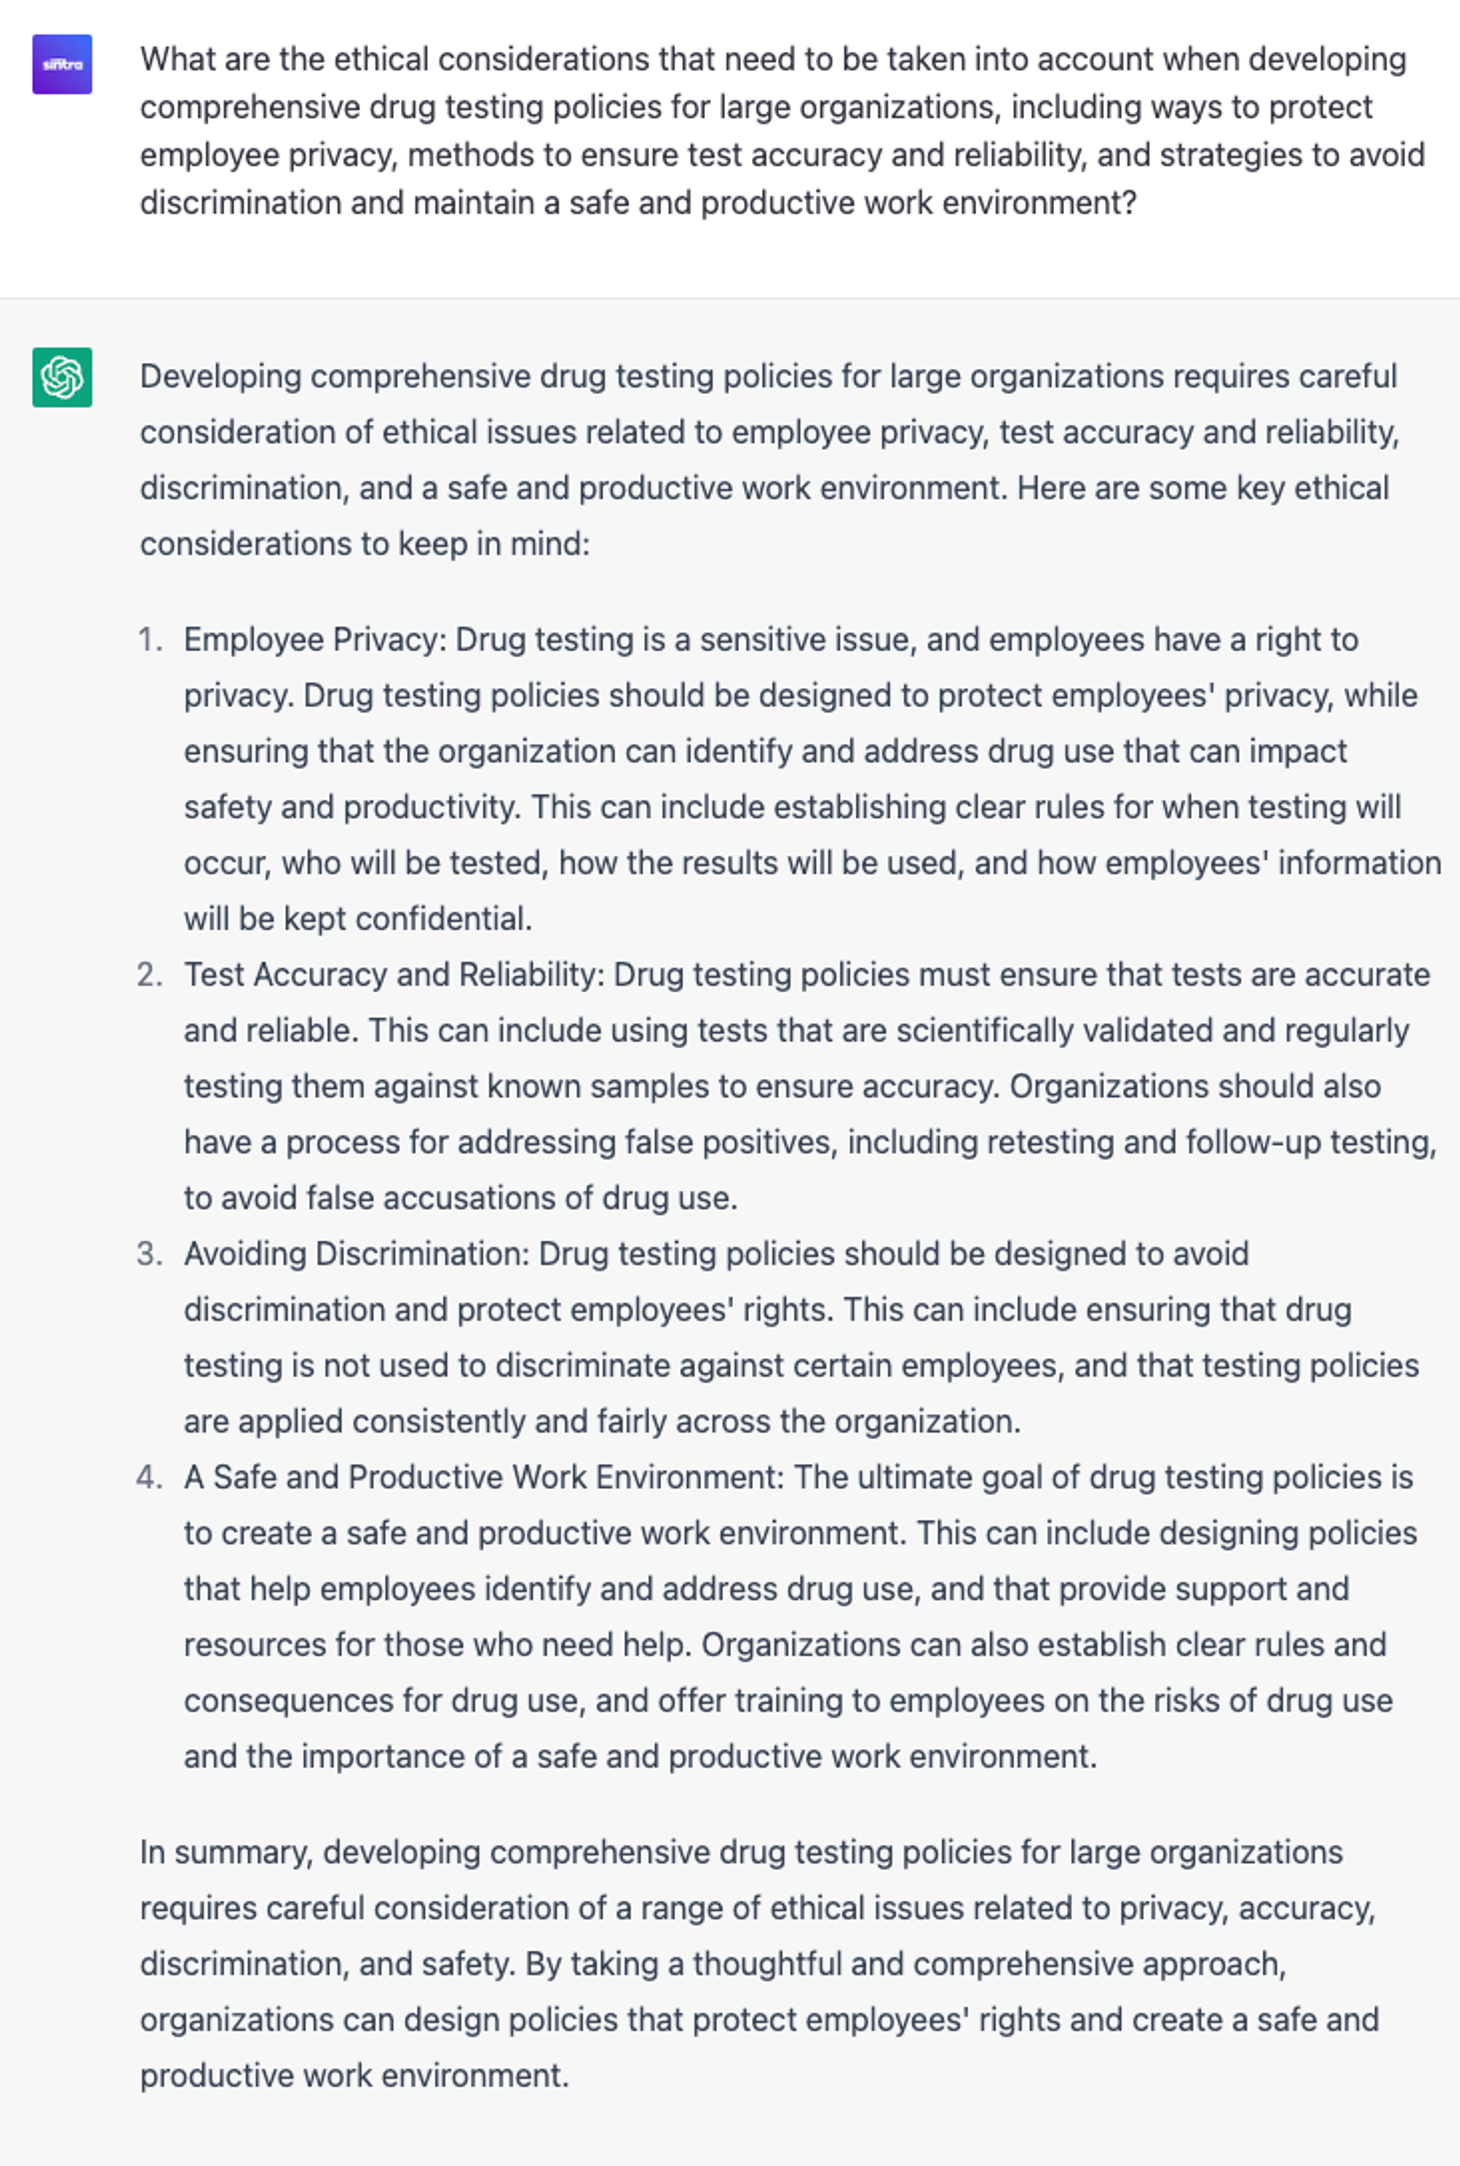  6 Strategic ChatGPT Prompts: Developing drug testing policies